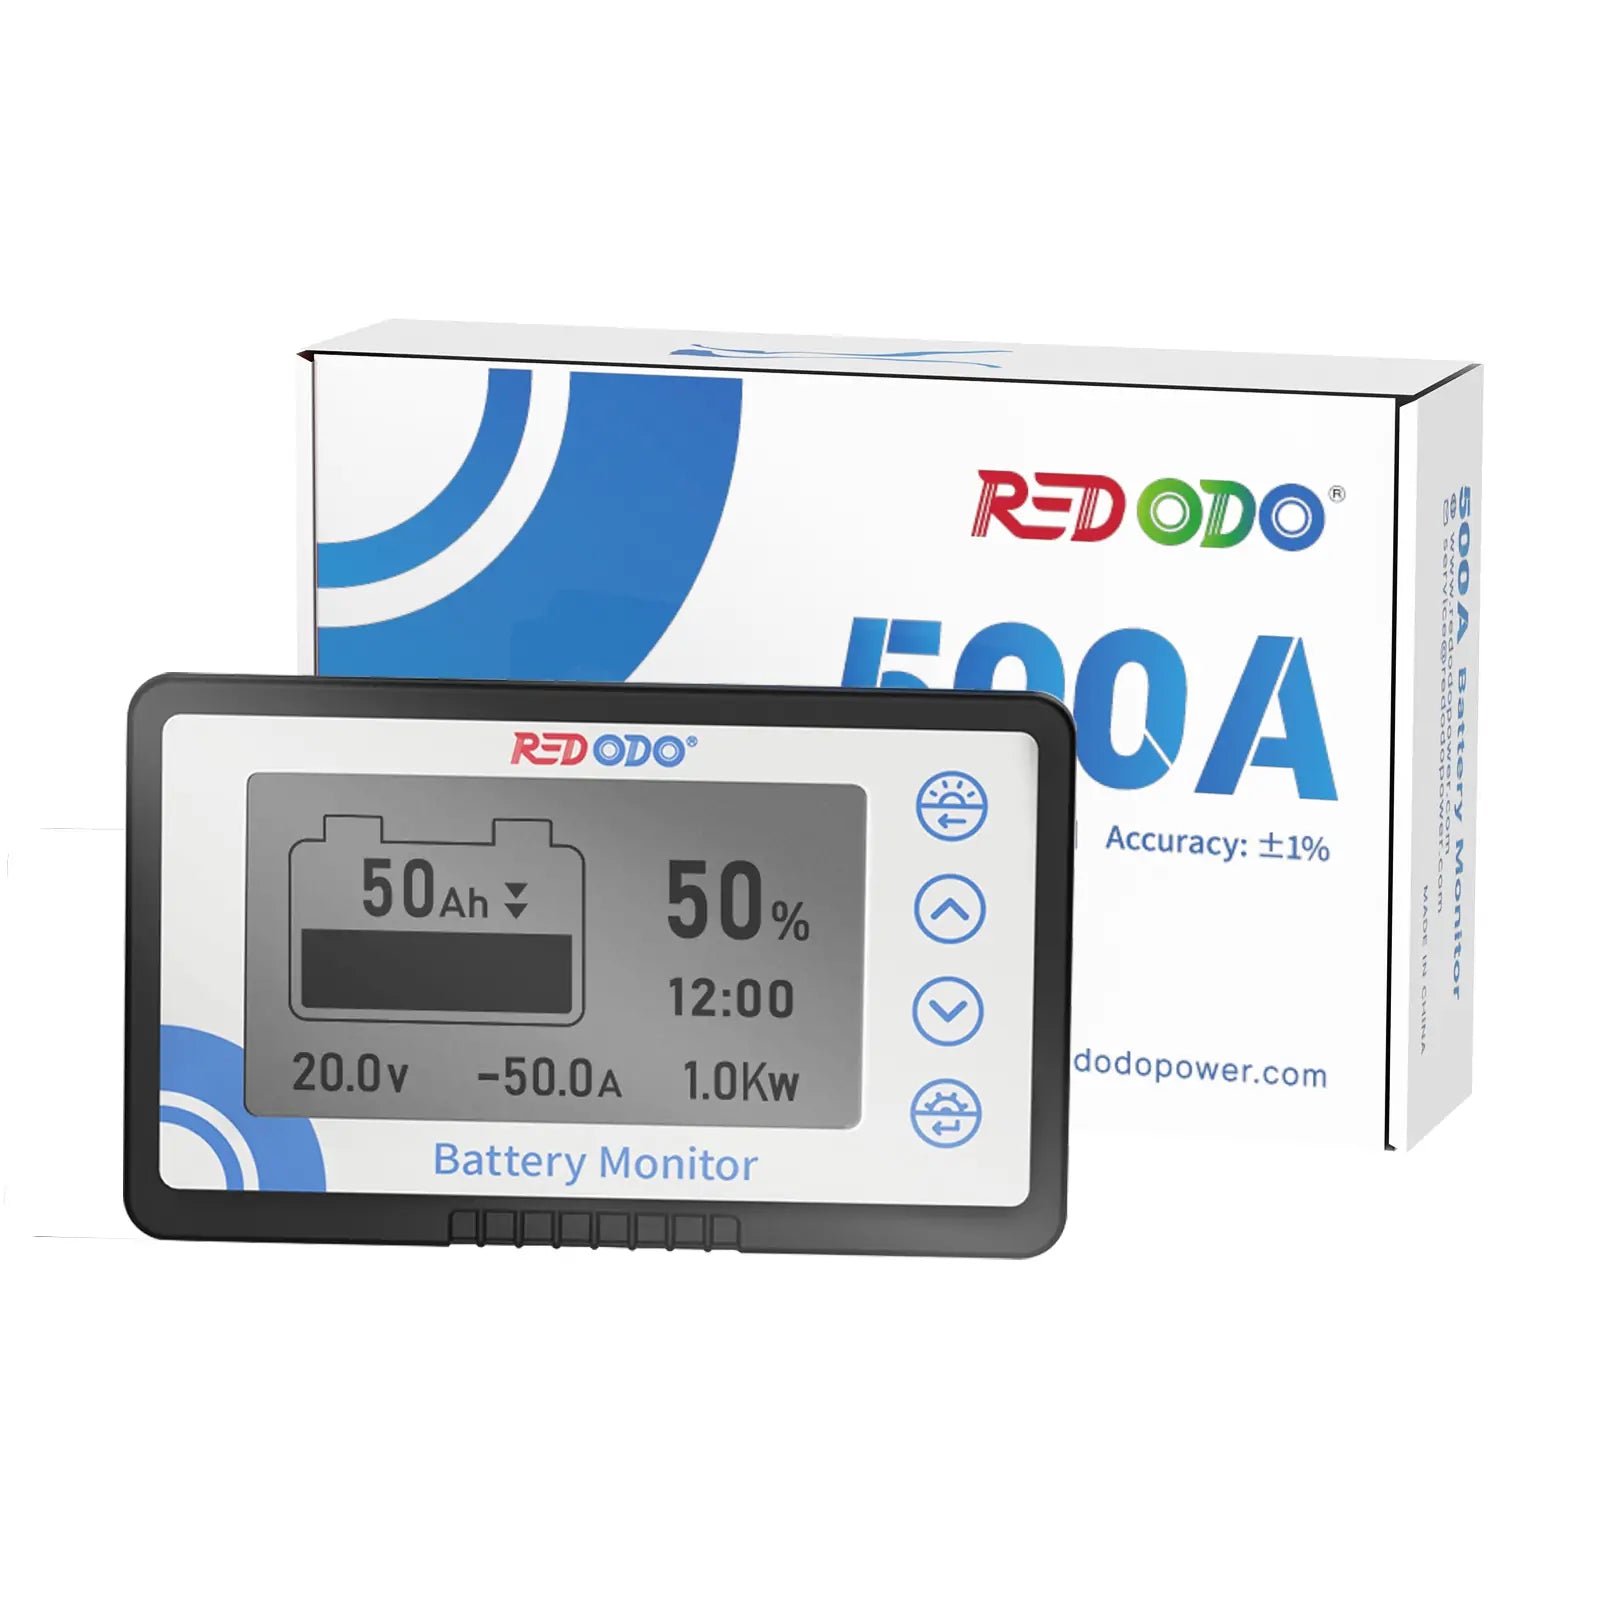 Redodo 500A Battery Monitor with Shunt Redodo Power